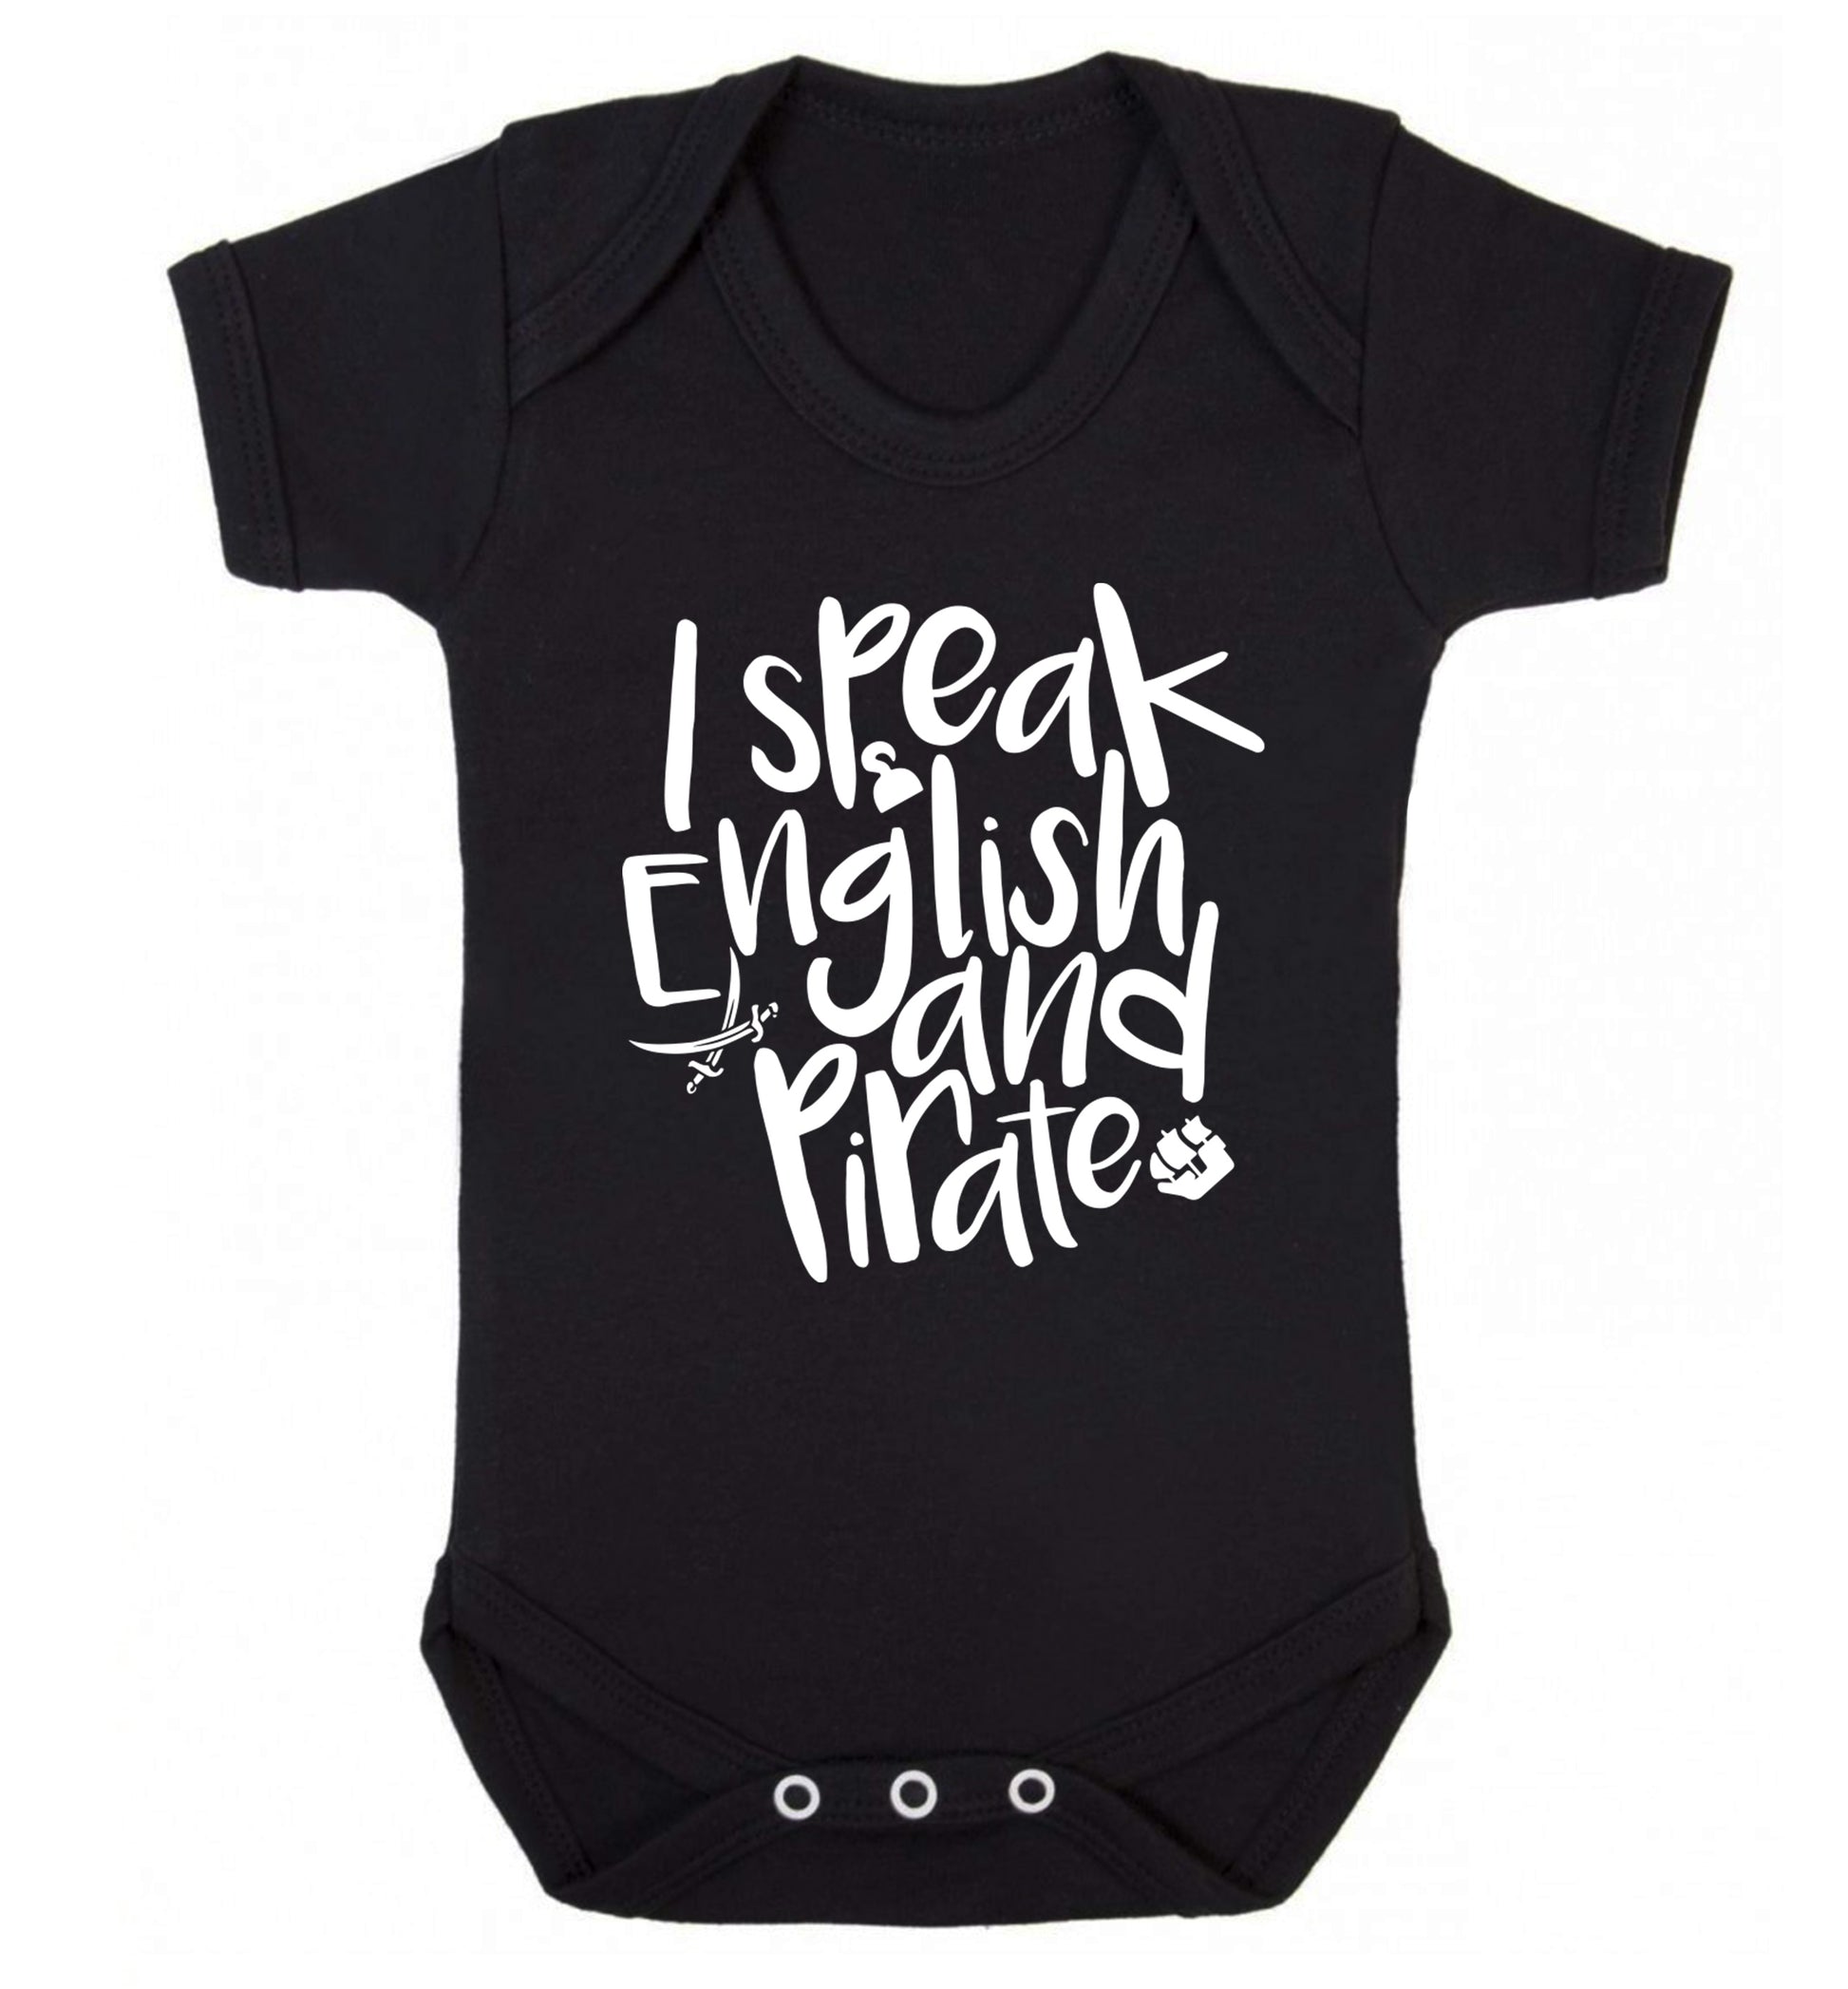 I speak English and pirate Baby Vest black 18-24 months